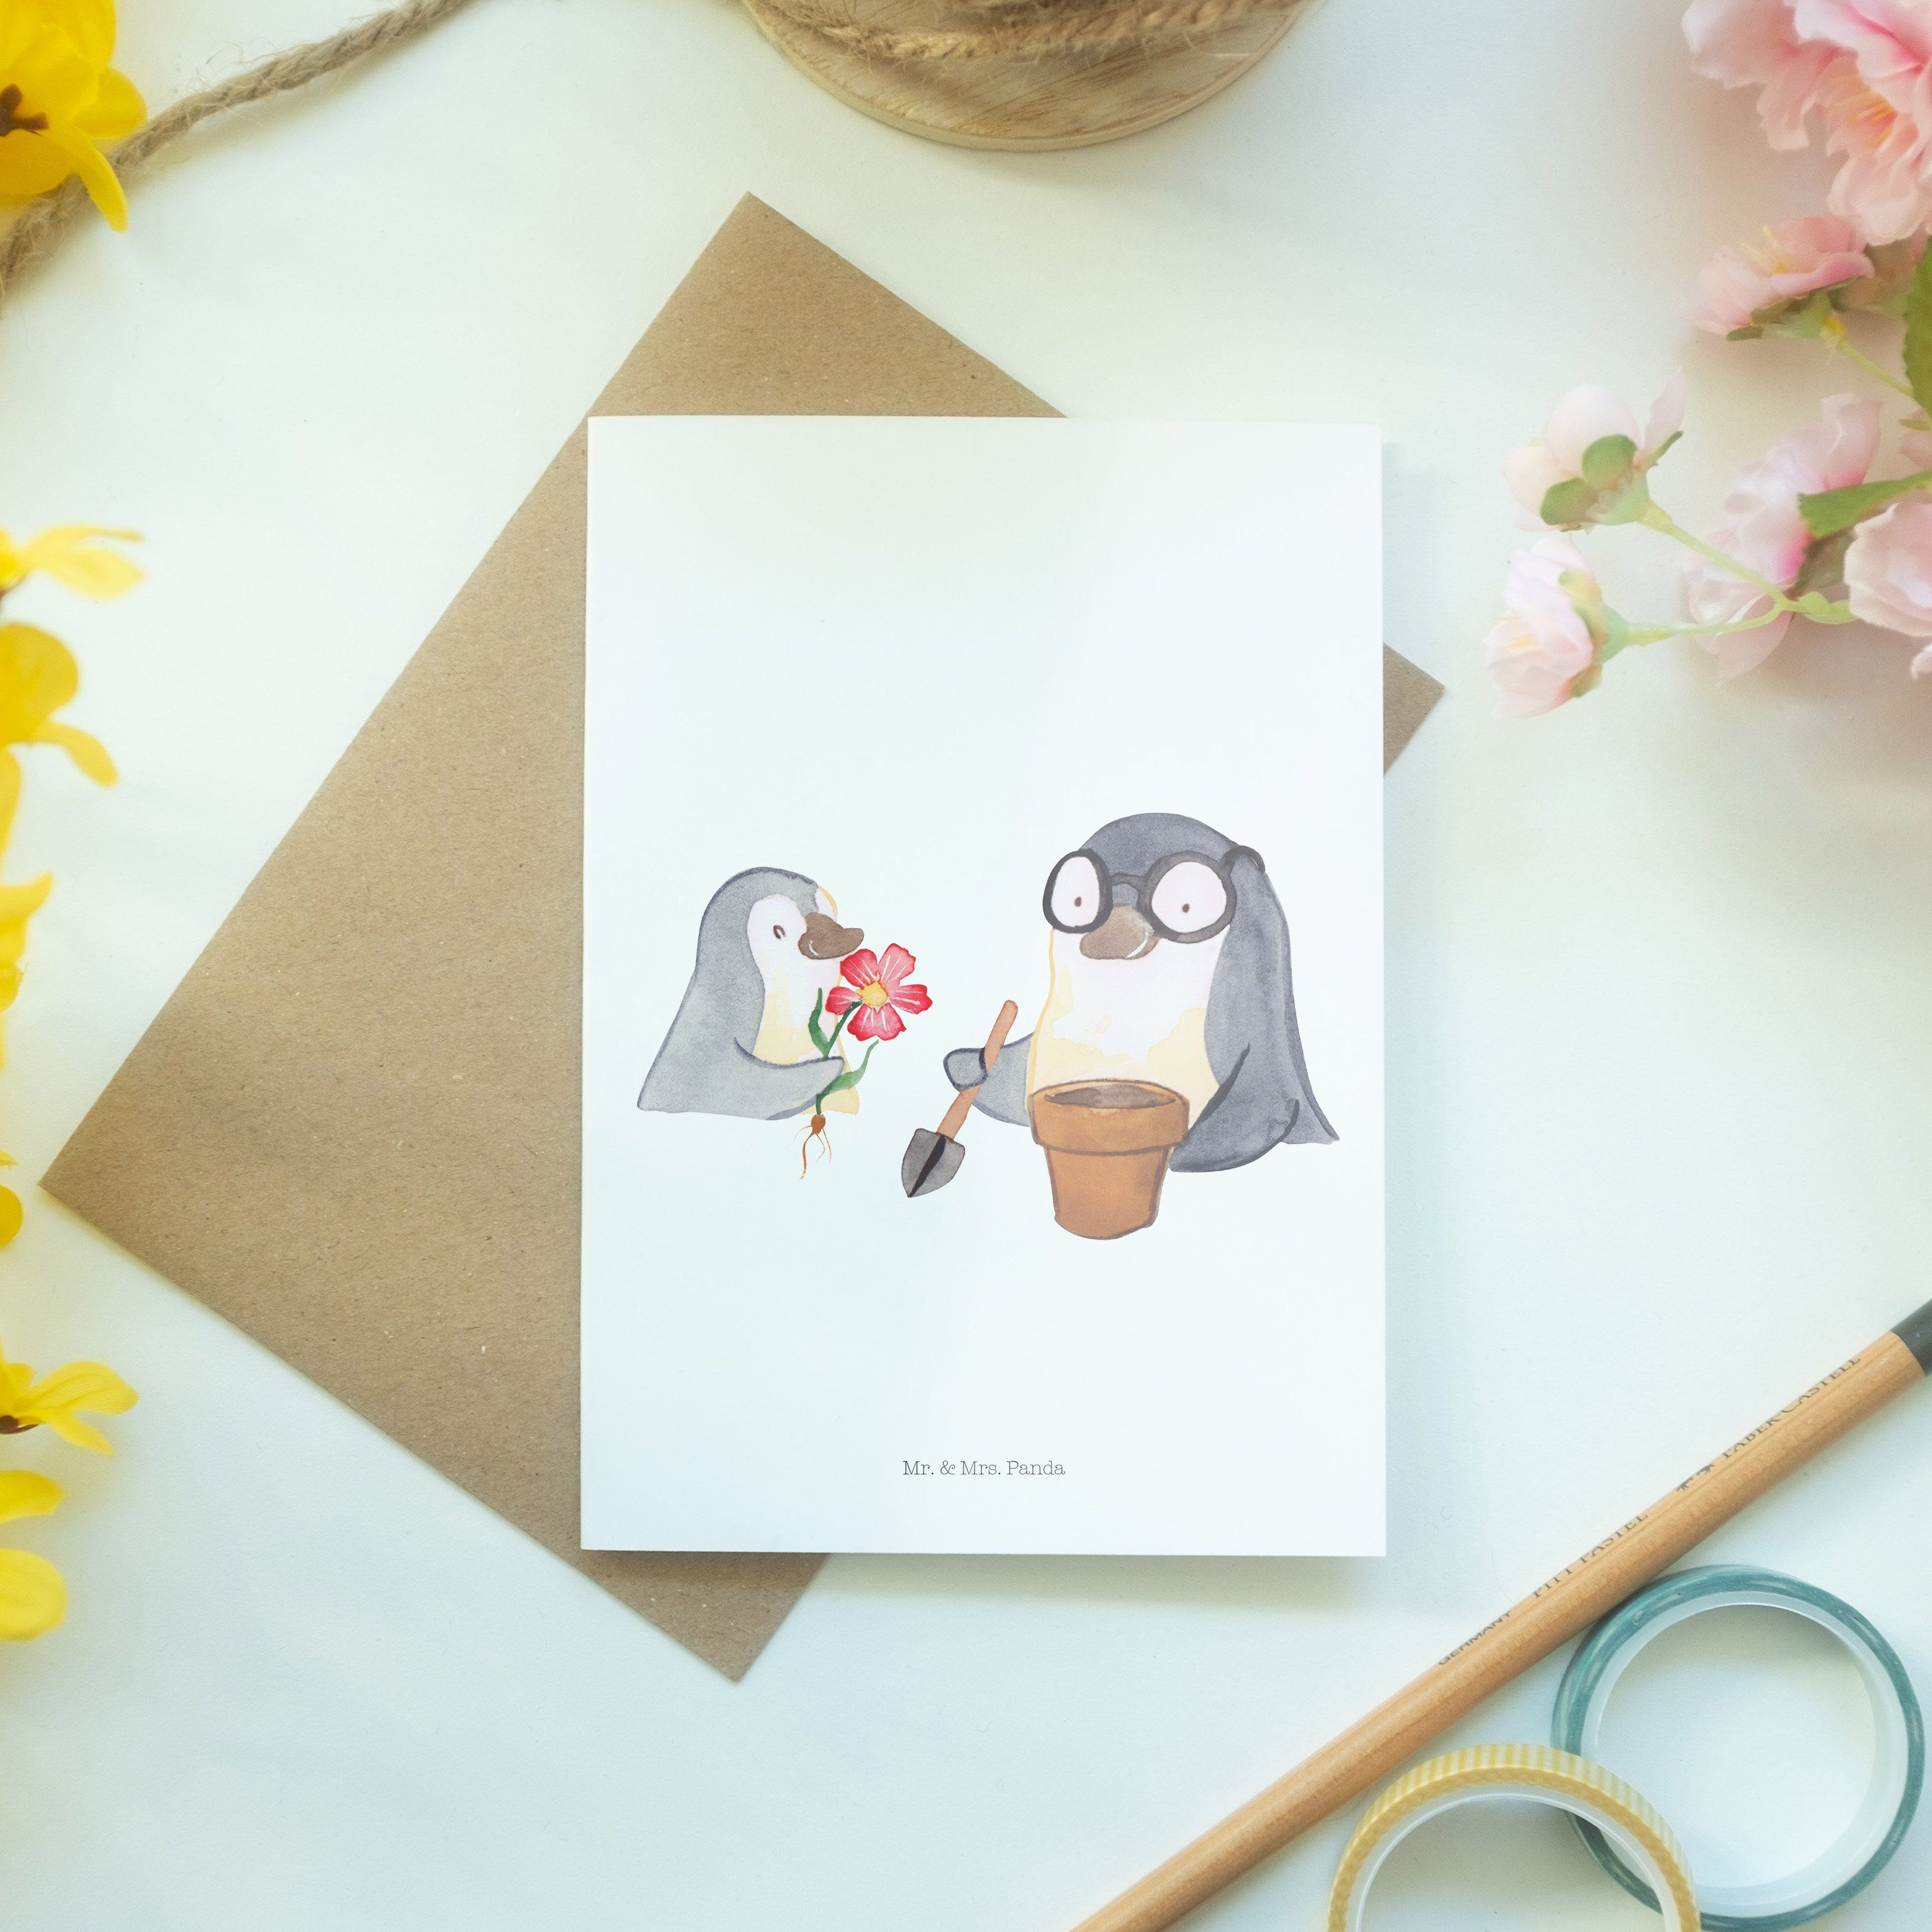 Mr. & Mrs. Panda Blumen - Geschenk, Opa pflanzen Pinguin Glückwunschkarte Opi, Weiß - Grußkarte